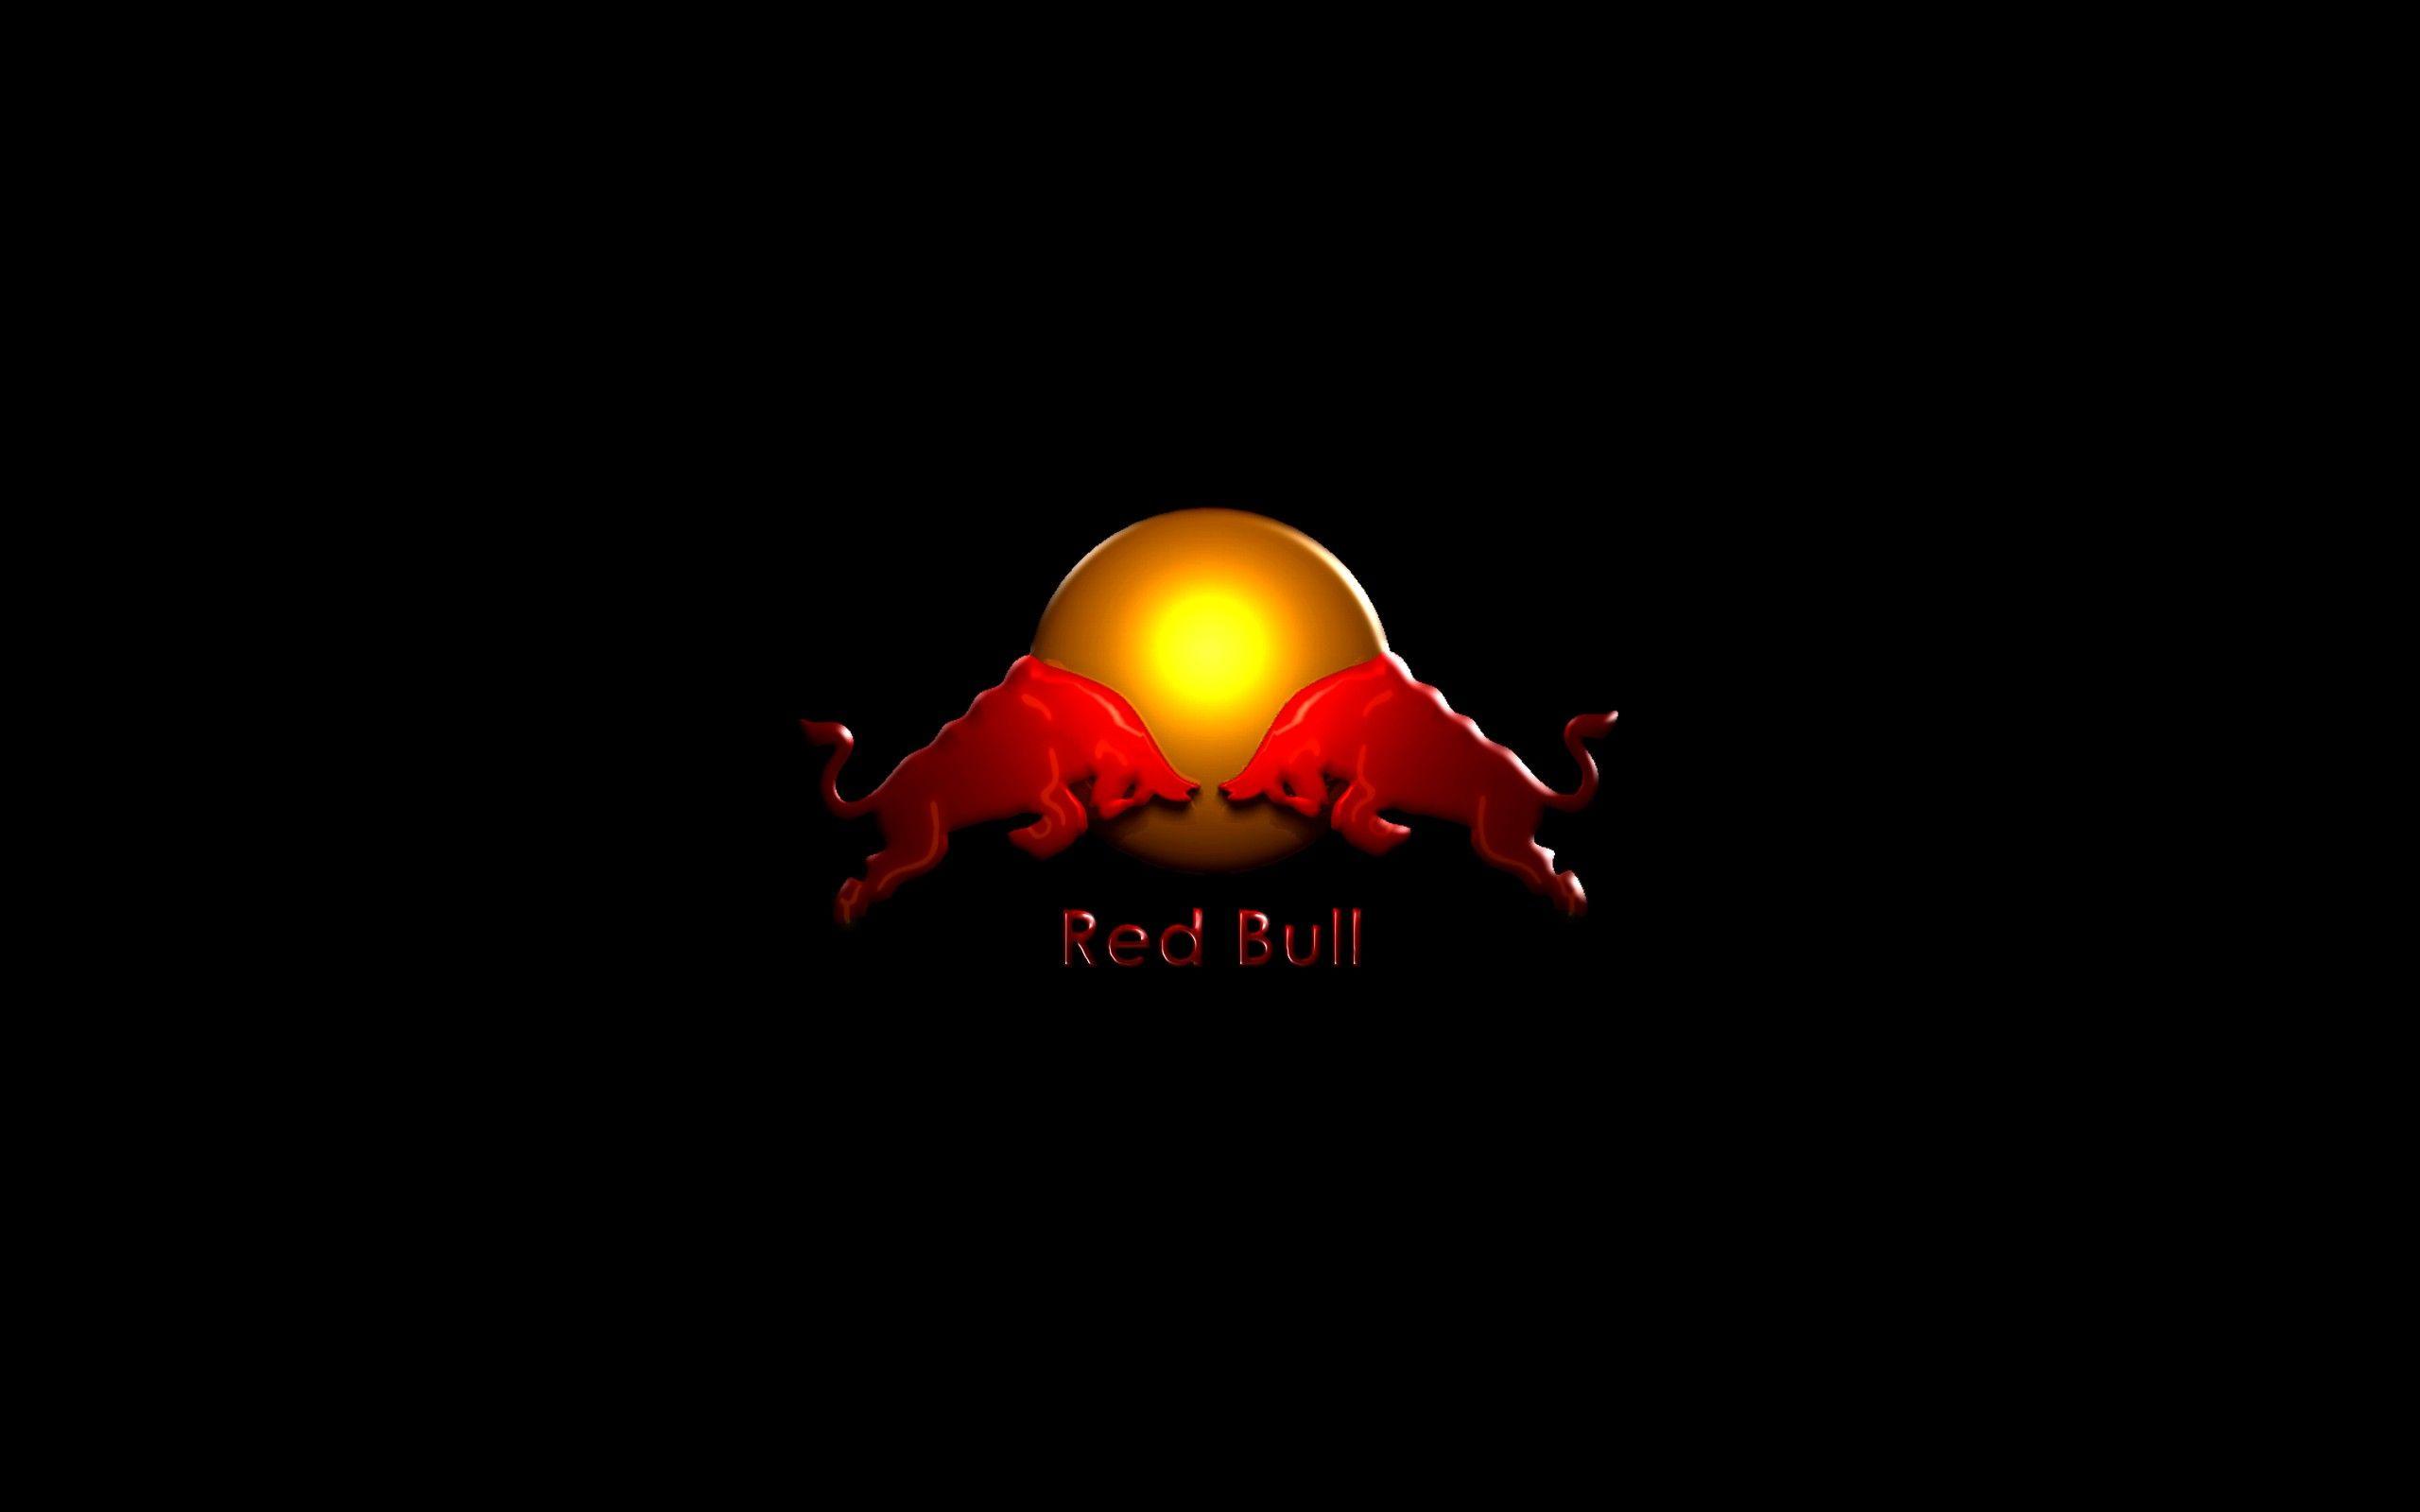 Red Bull Wallpaper, 38 Full HD Quality Red Bull Pics In HD Quality